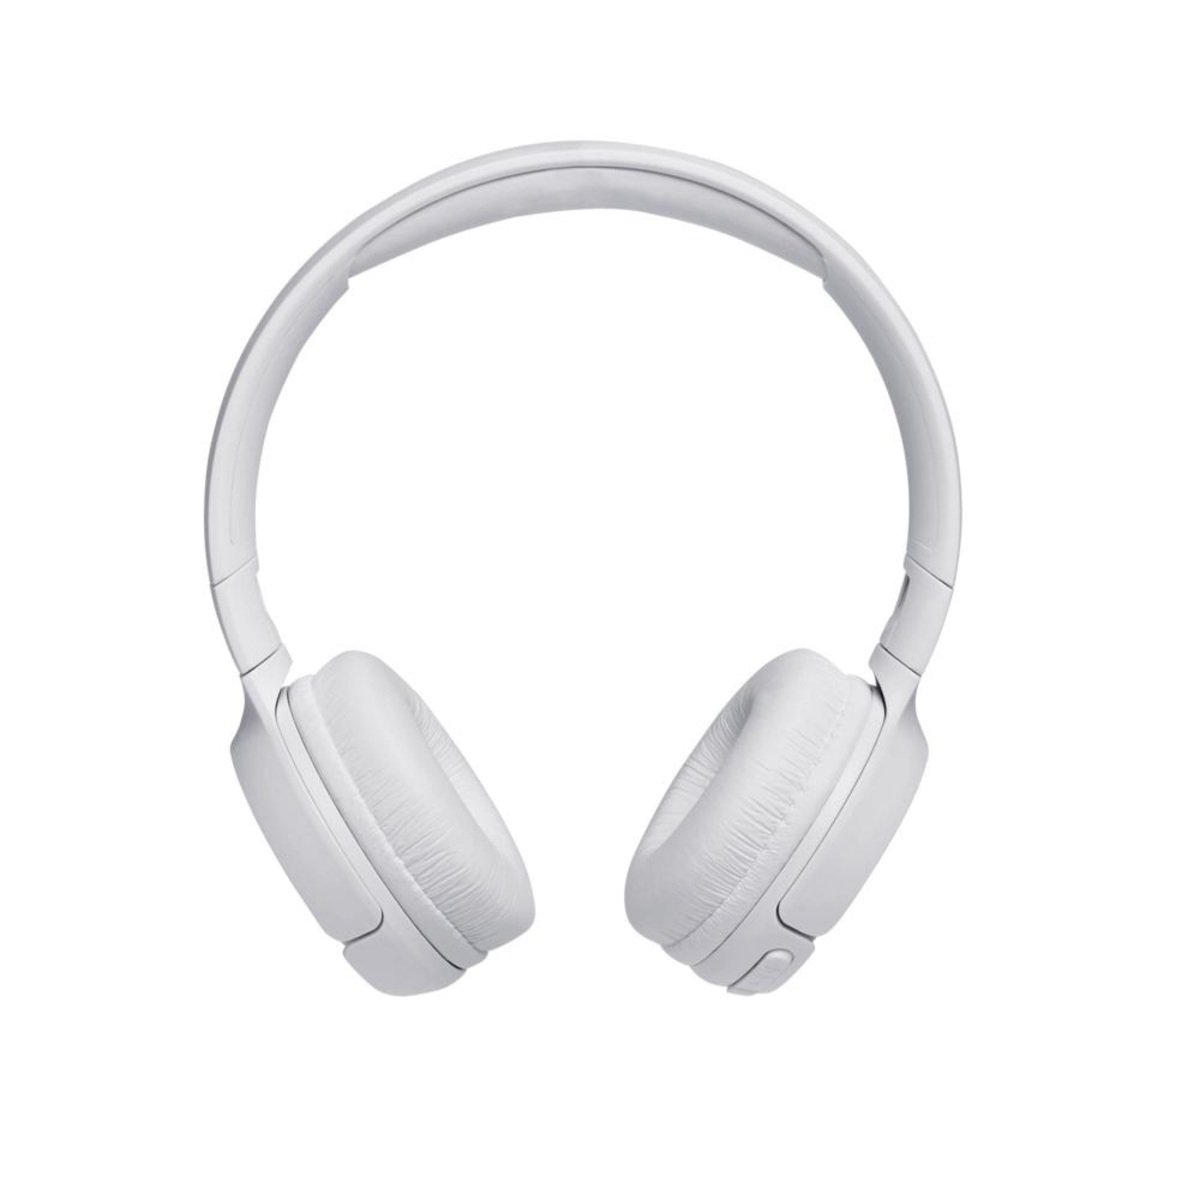 JBL Wireless Headphone JBLT500BT White